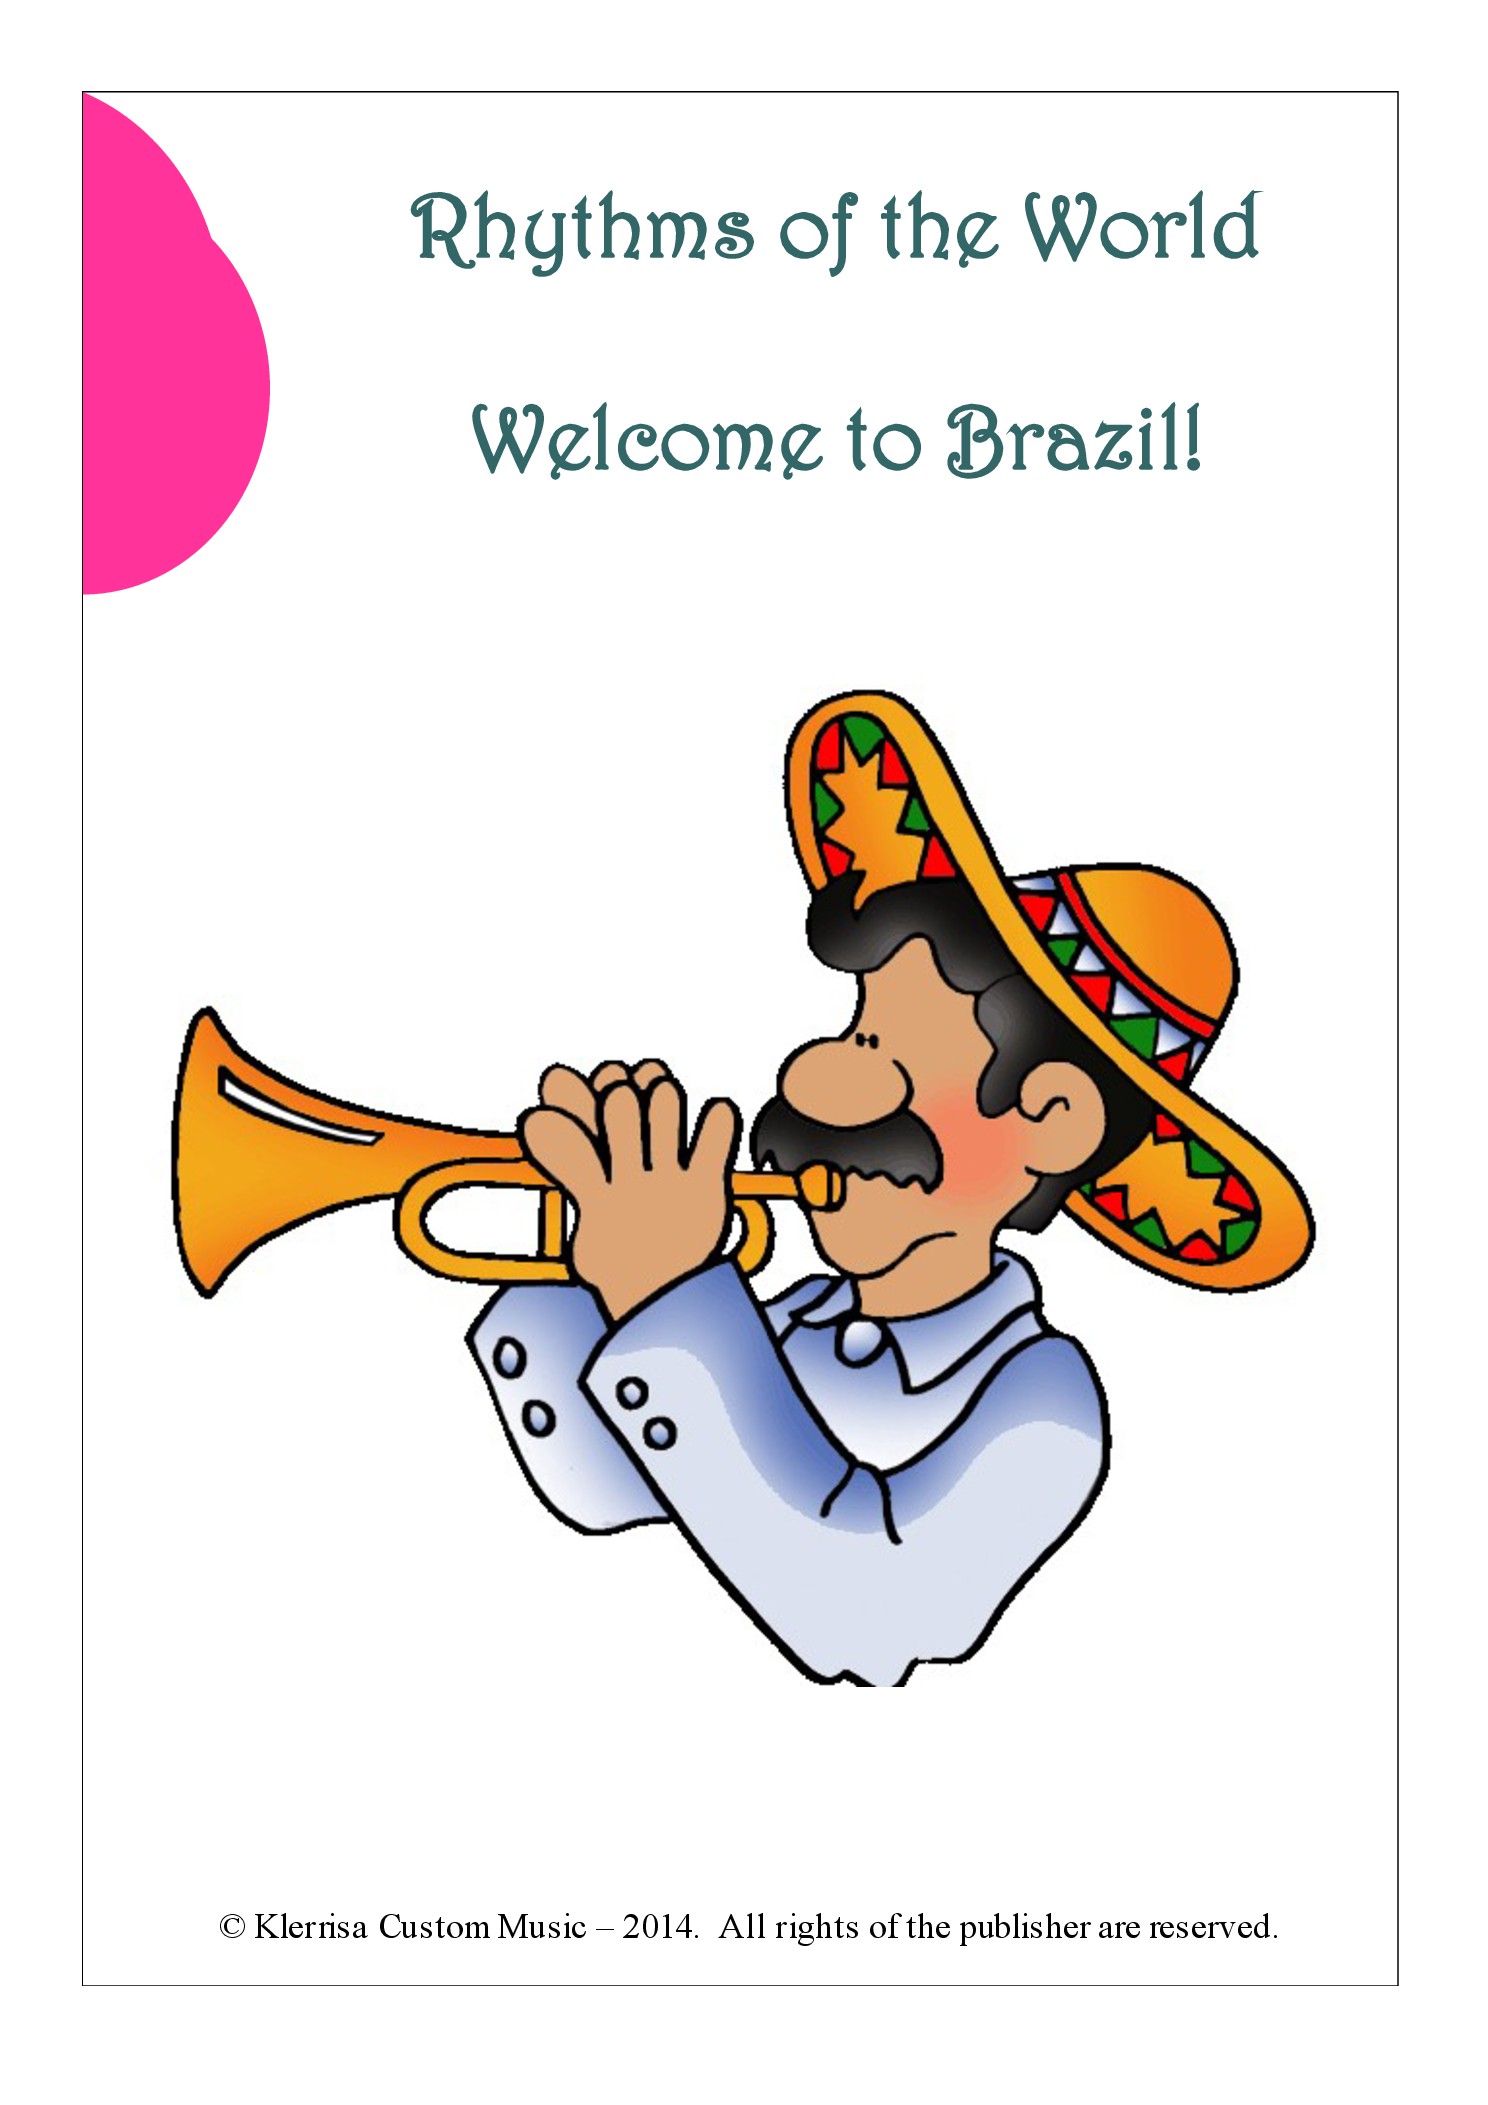 Rhythms of the World - Brazil